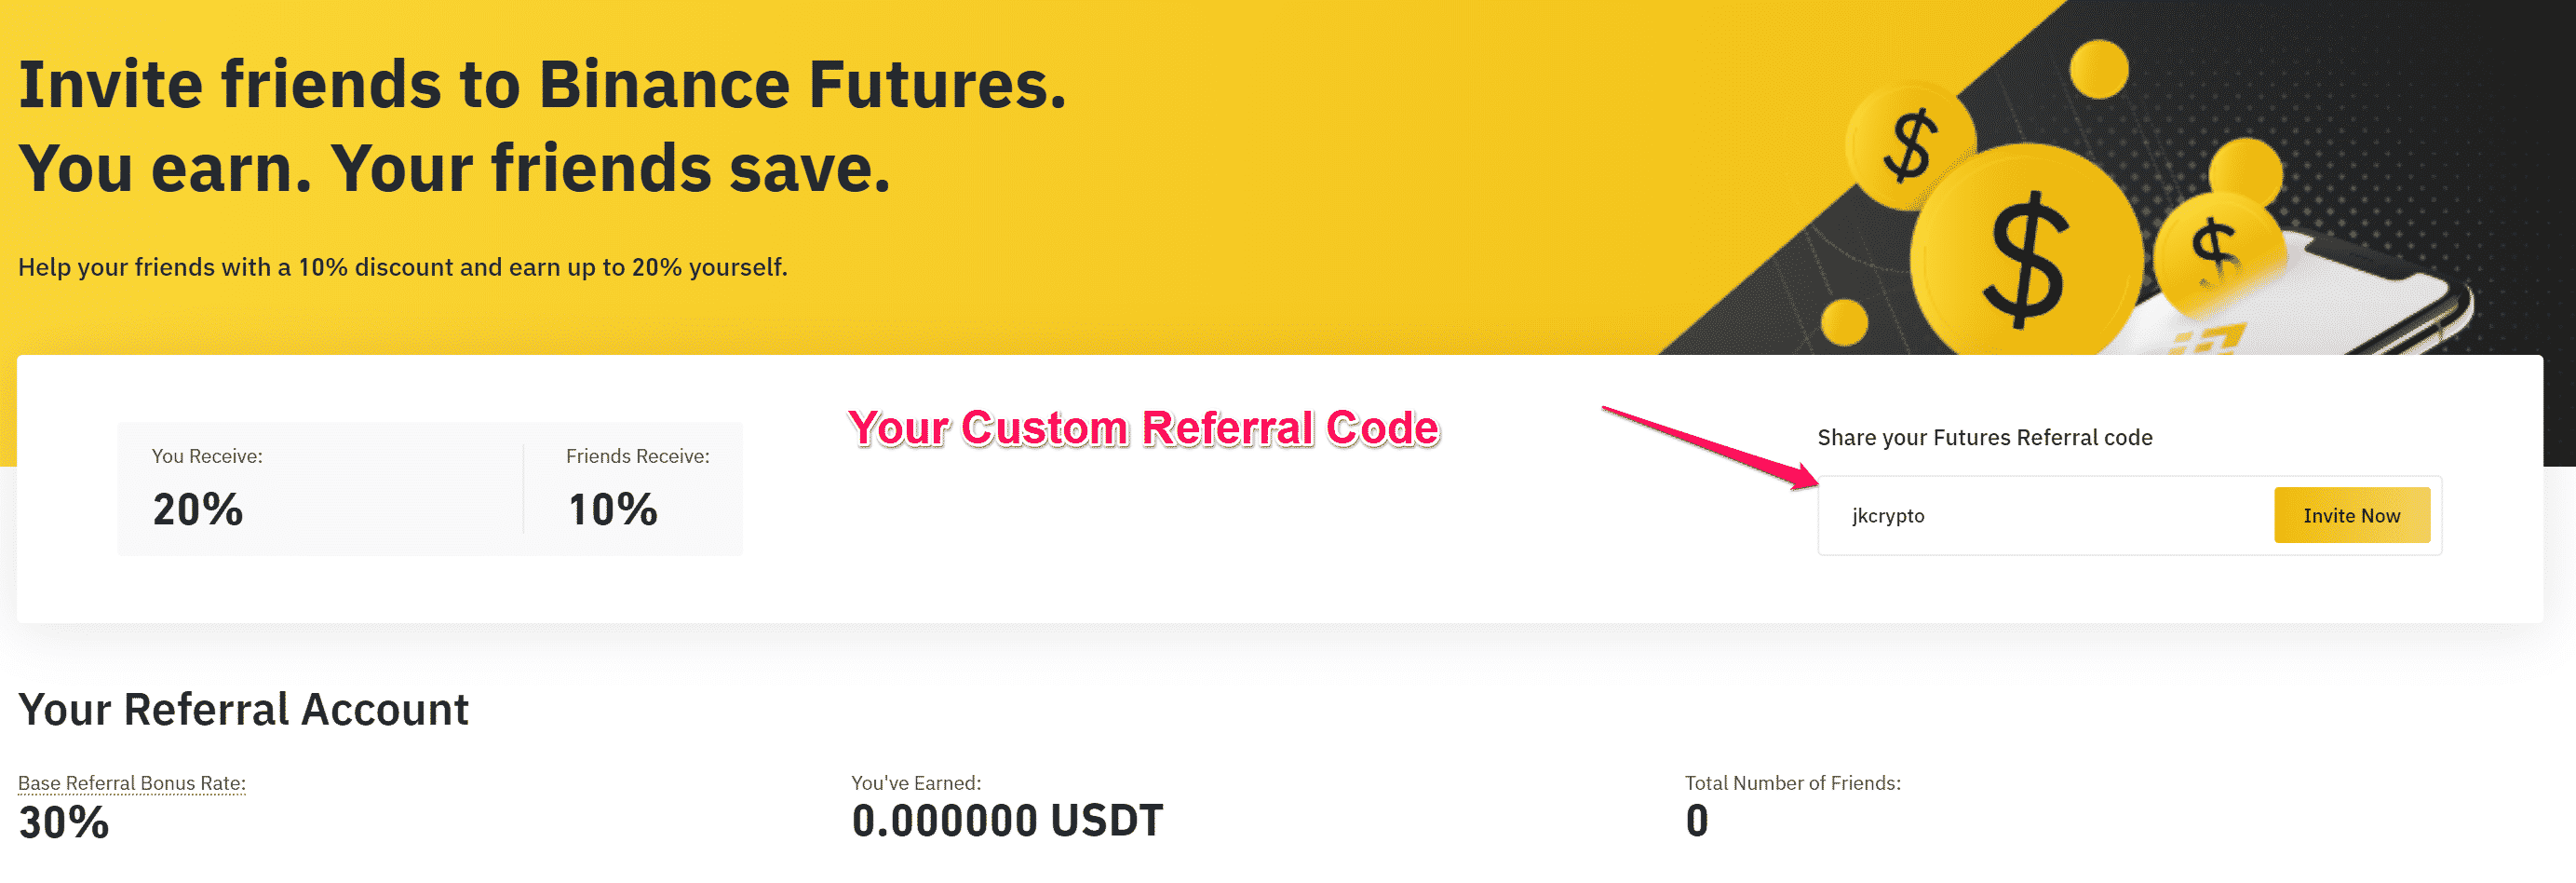 Binance Futures Custom Referral Code